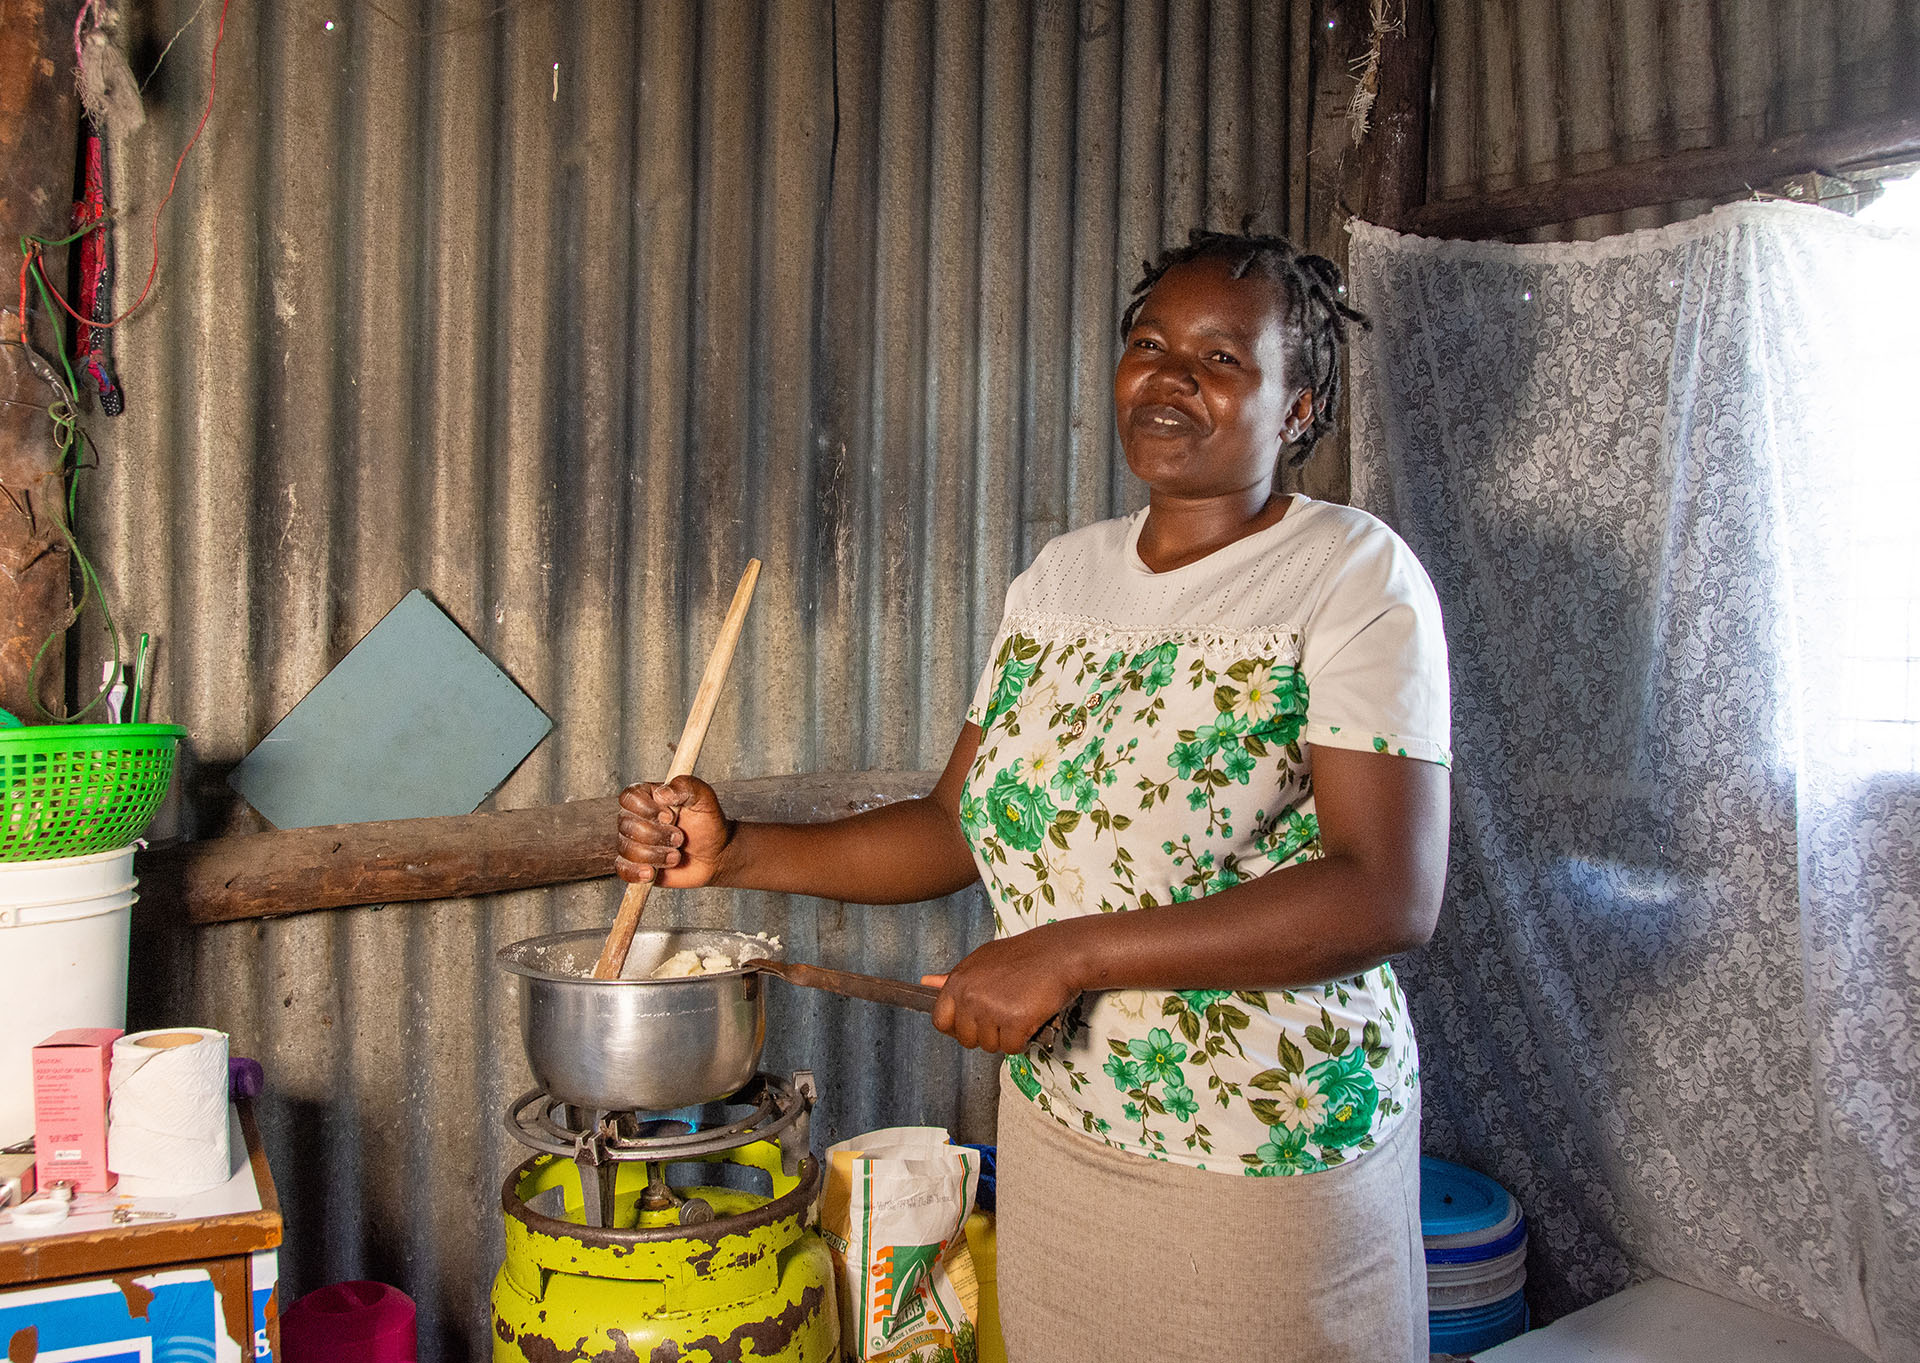 Cooking ugali with an LPG 'Meko' stove in Mukuru District, Nairobi